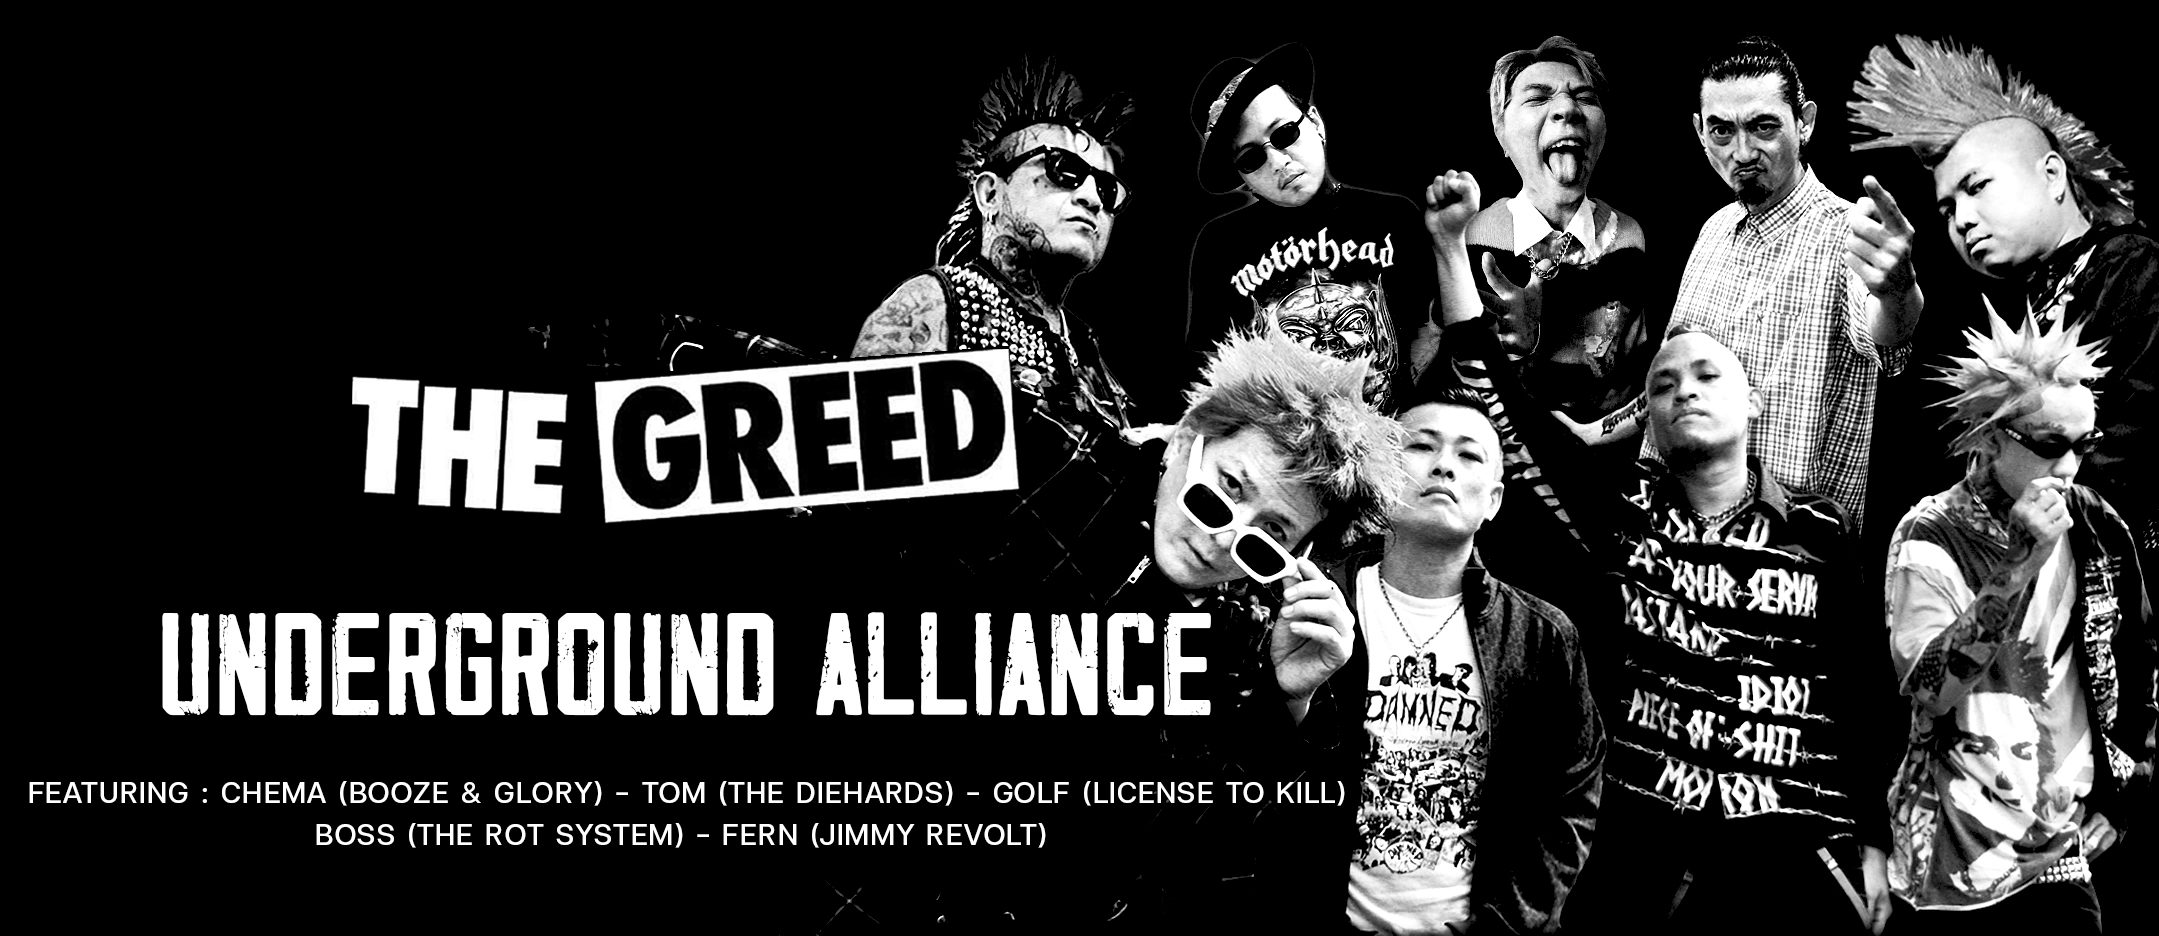 THE GREED - Underground Alliance